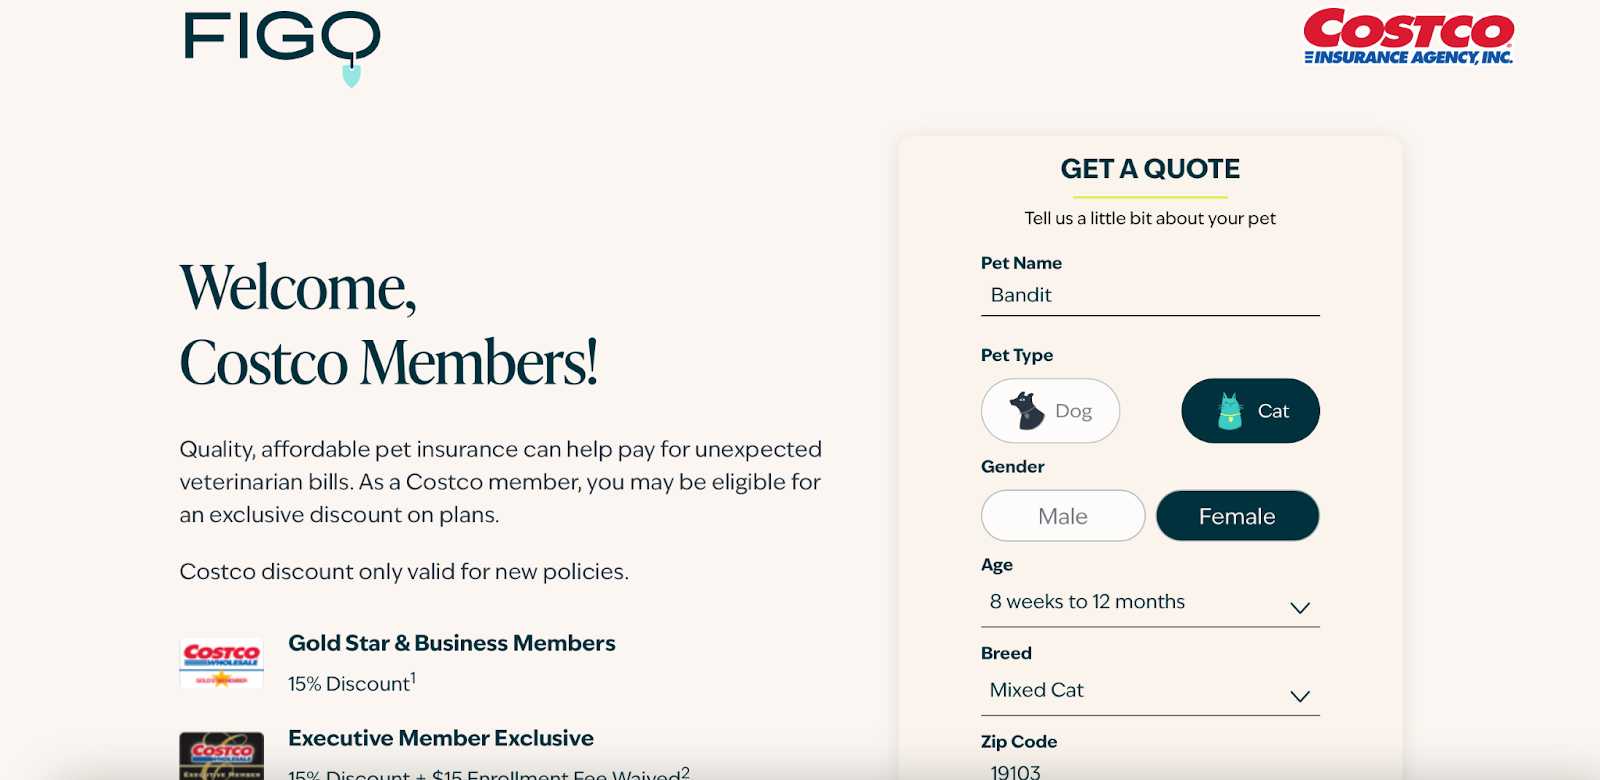 Figo's "Welcome, Costco members!" page